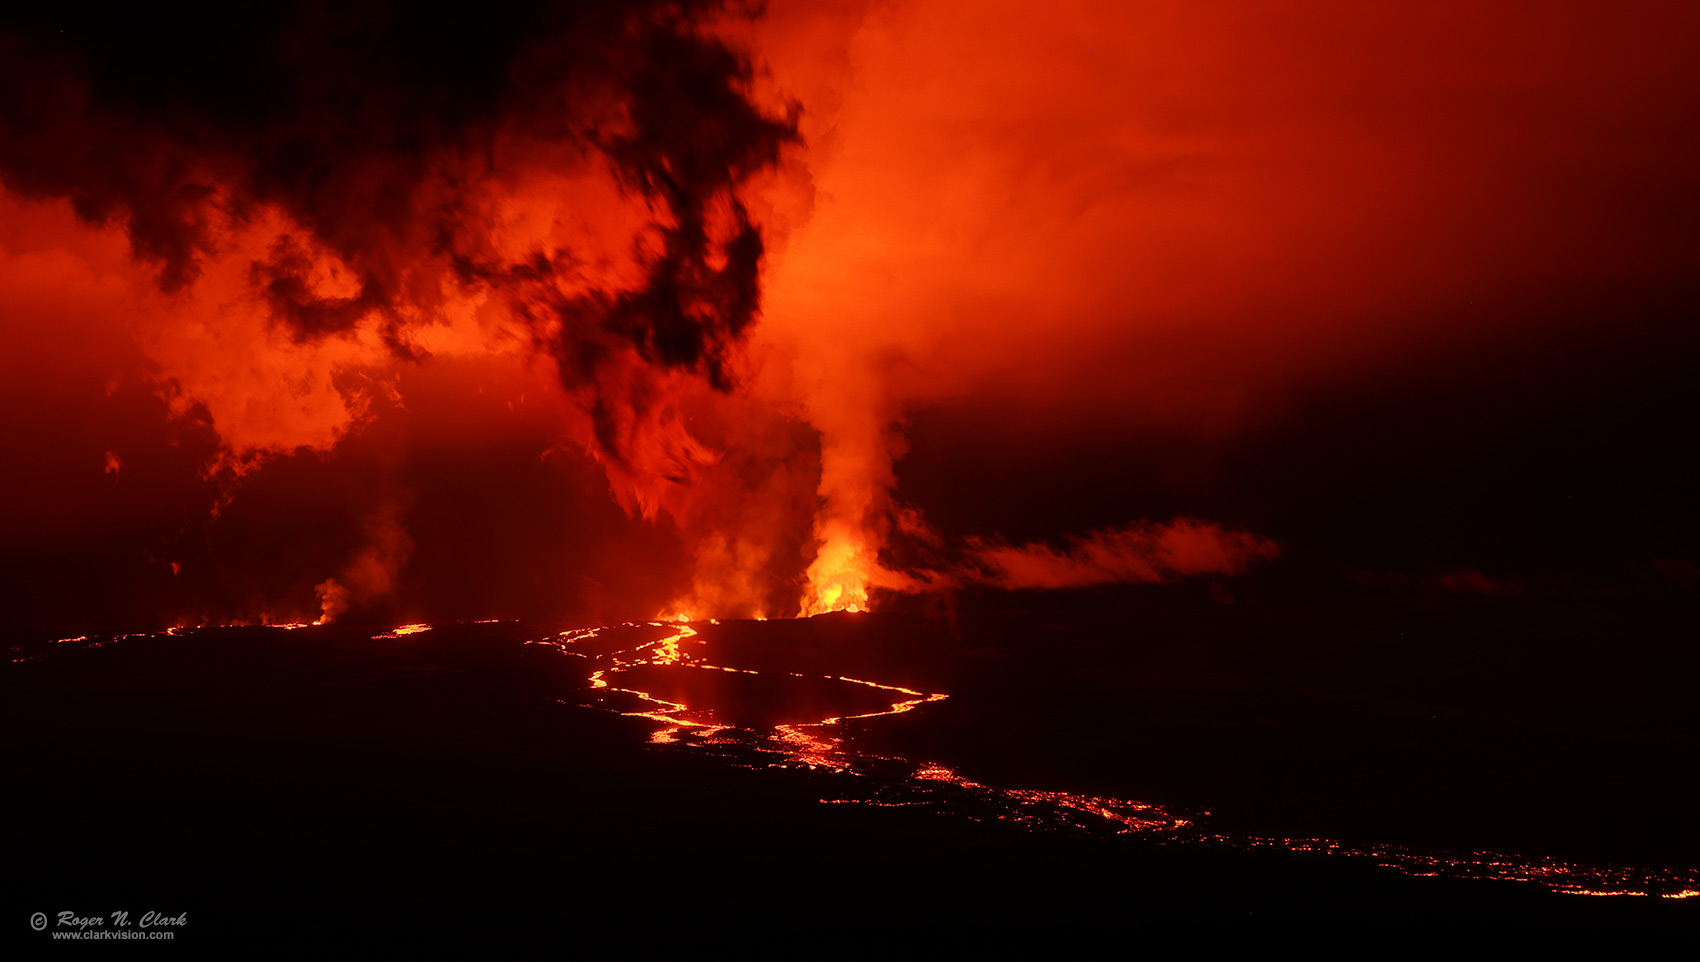 mauna-loa-eruption-rnclark-c11-30-2022-4C3A2900.cj1-1700s.jpg
                                                   is Copyrighted by Roger N. Clark, www.clarkvision.com